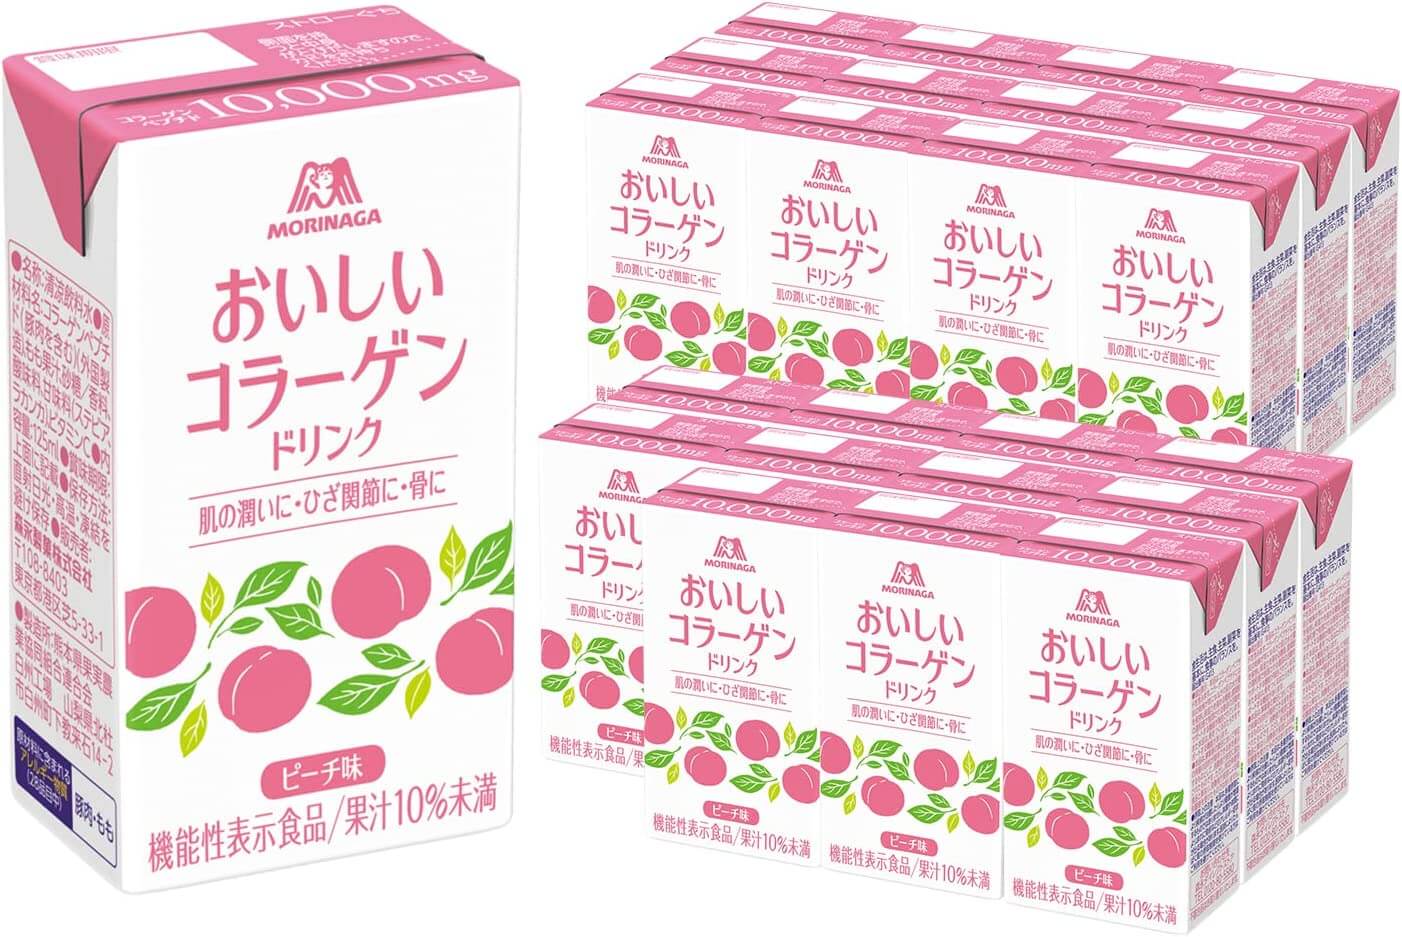 morinaga конфеты morinagа hi chew strawberry Коллагеновый напиток Morinaga Seika Delicious, 24 упаковки